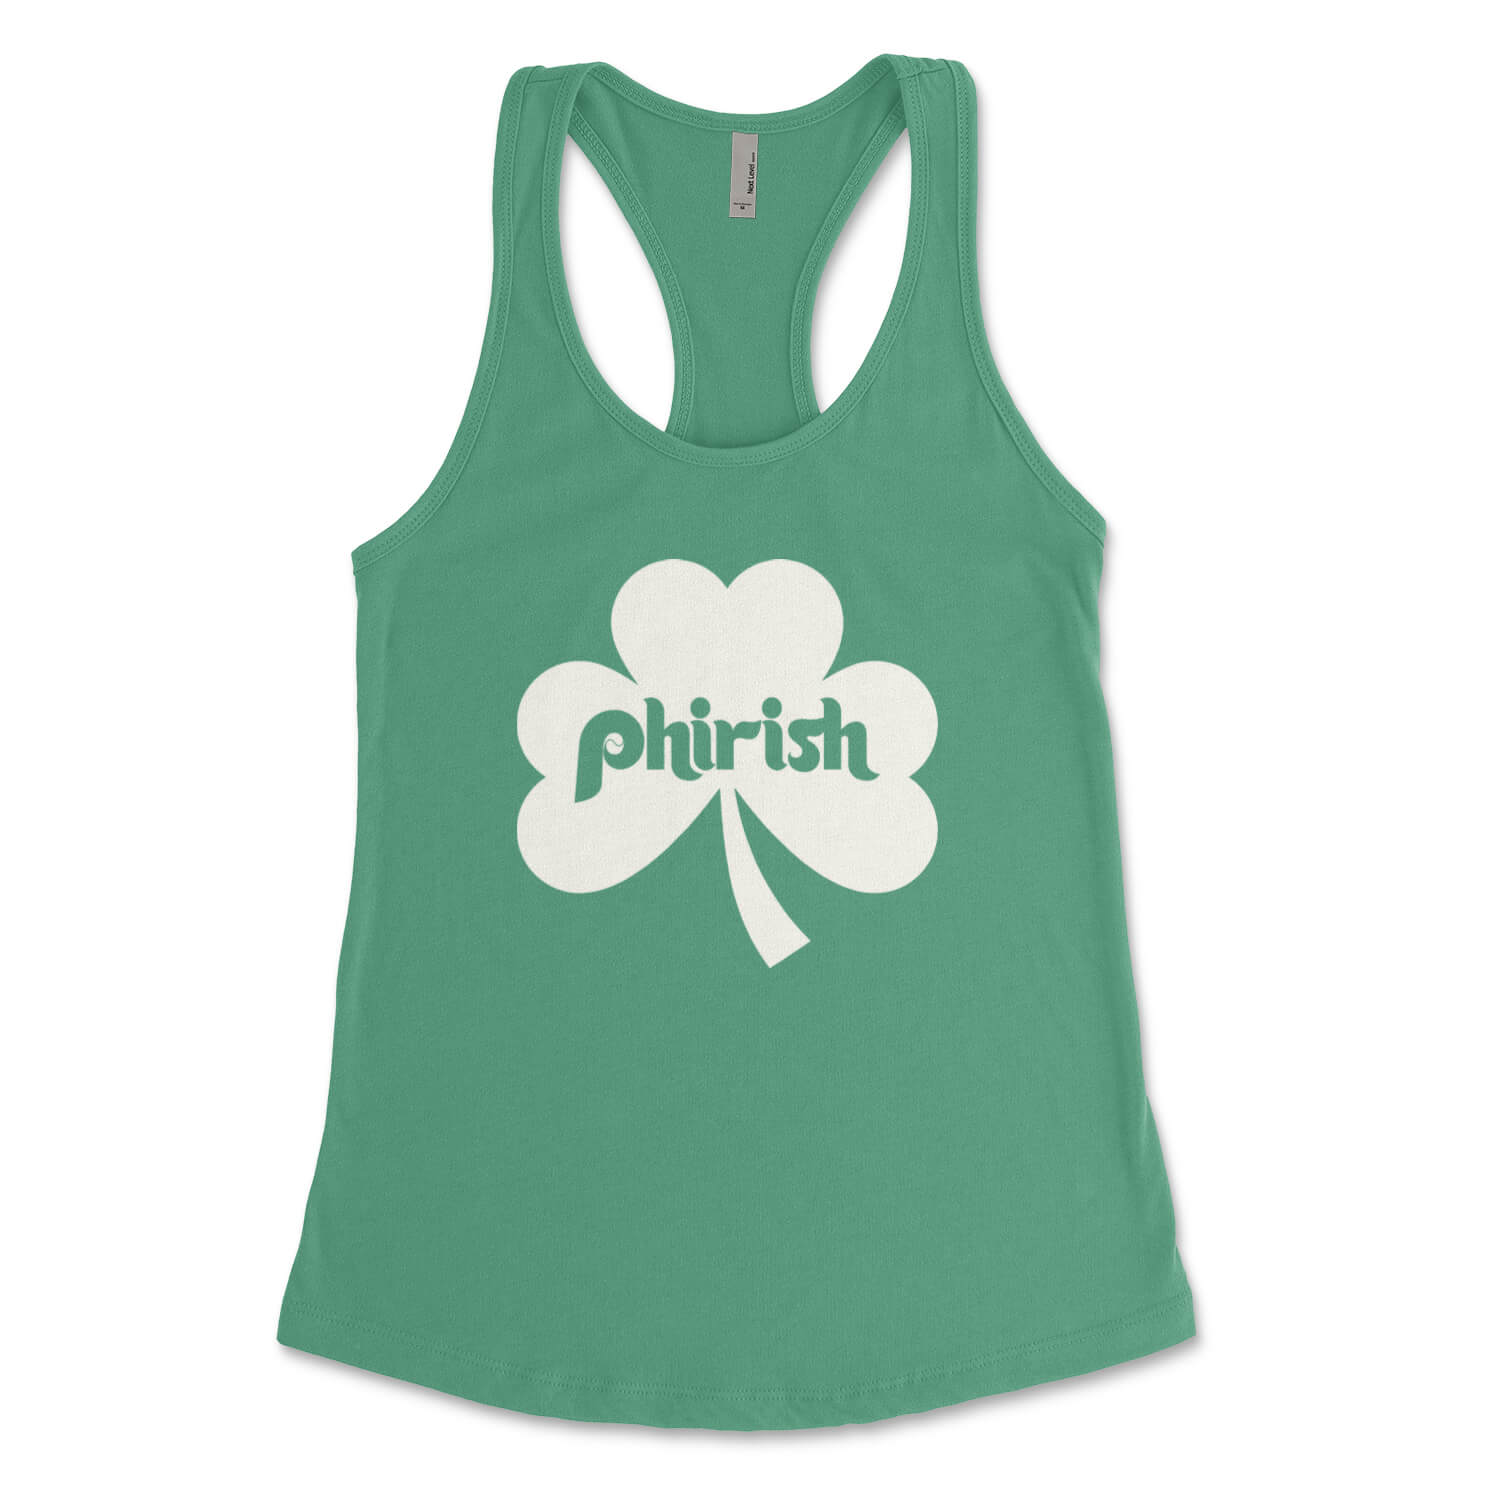 Philadelphia Irish Phirish shamrock st. paddy's day kelly green womens tank top from Phillygoat